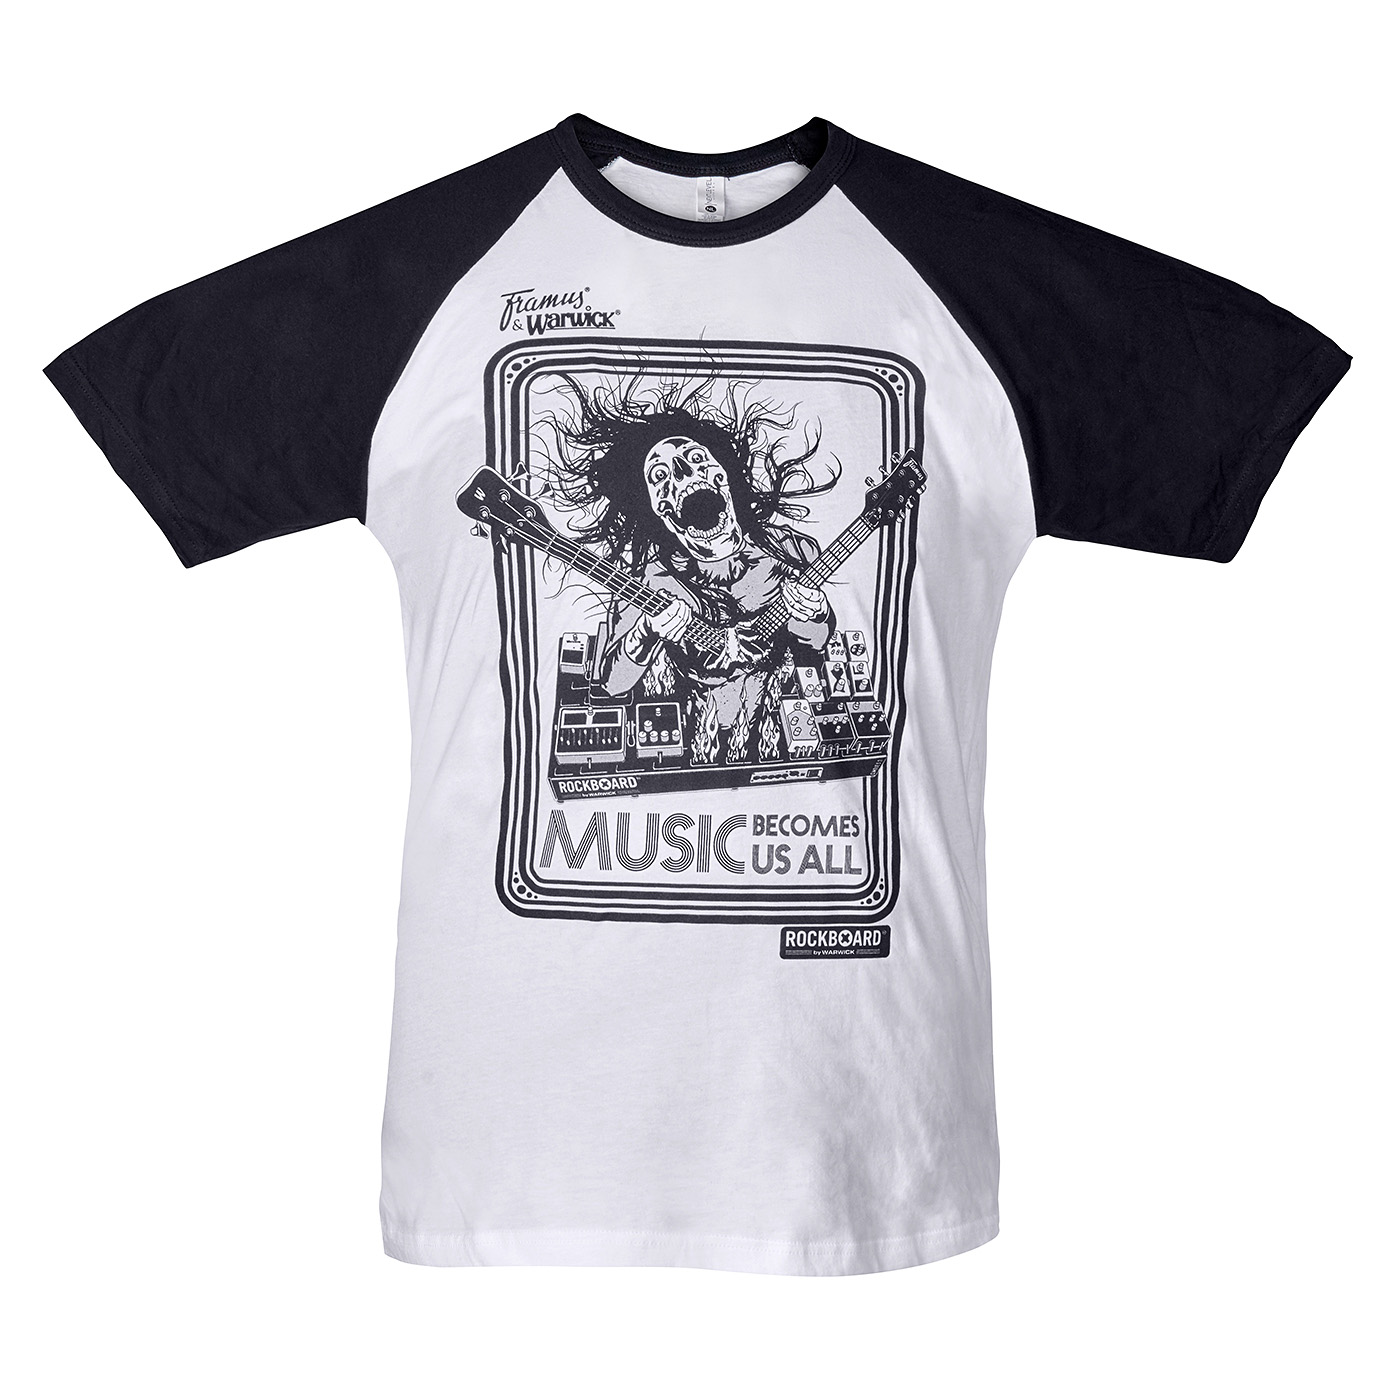 RockBoard Promo - Screamer Baseball T-Shirt White/Black - Size L